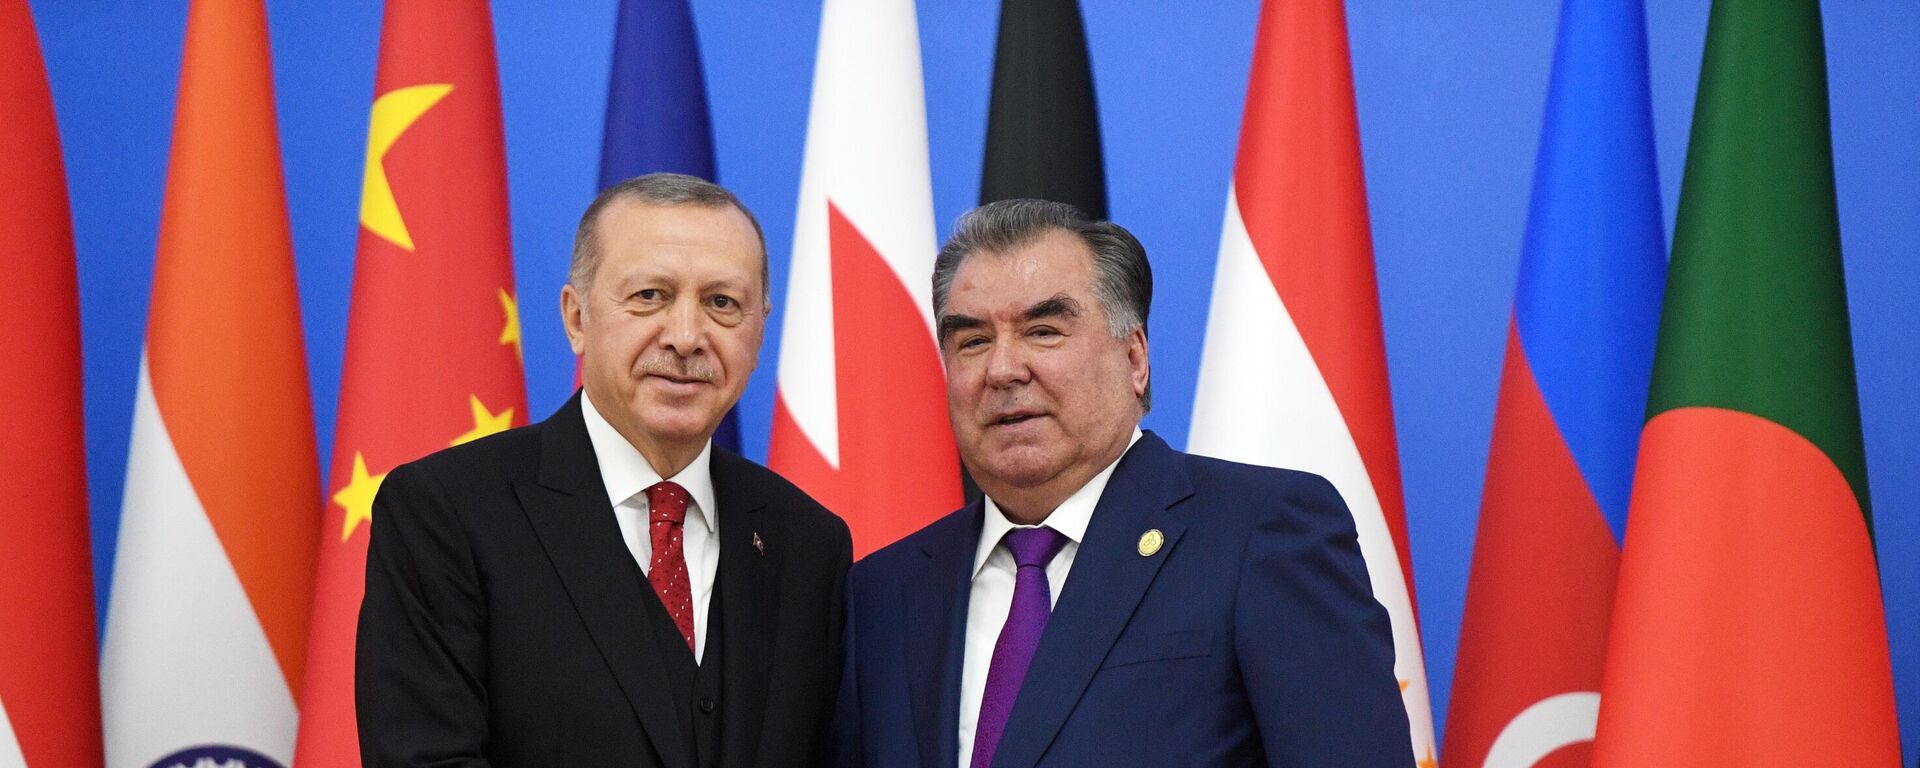 Президент Таджикистана Эмомали Рахмон и президент Турции Реджеп Тайип Эрдоган - Sputnik Таджикистан, 1920, 09.09.2021